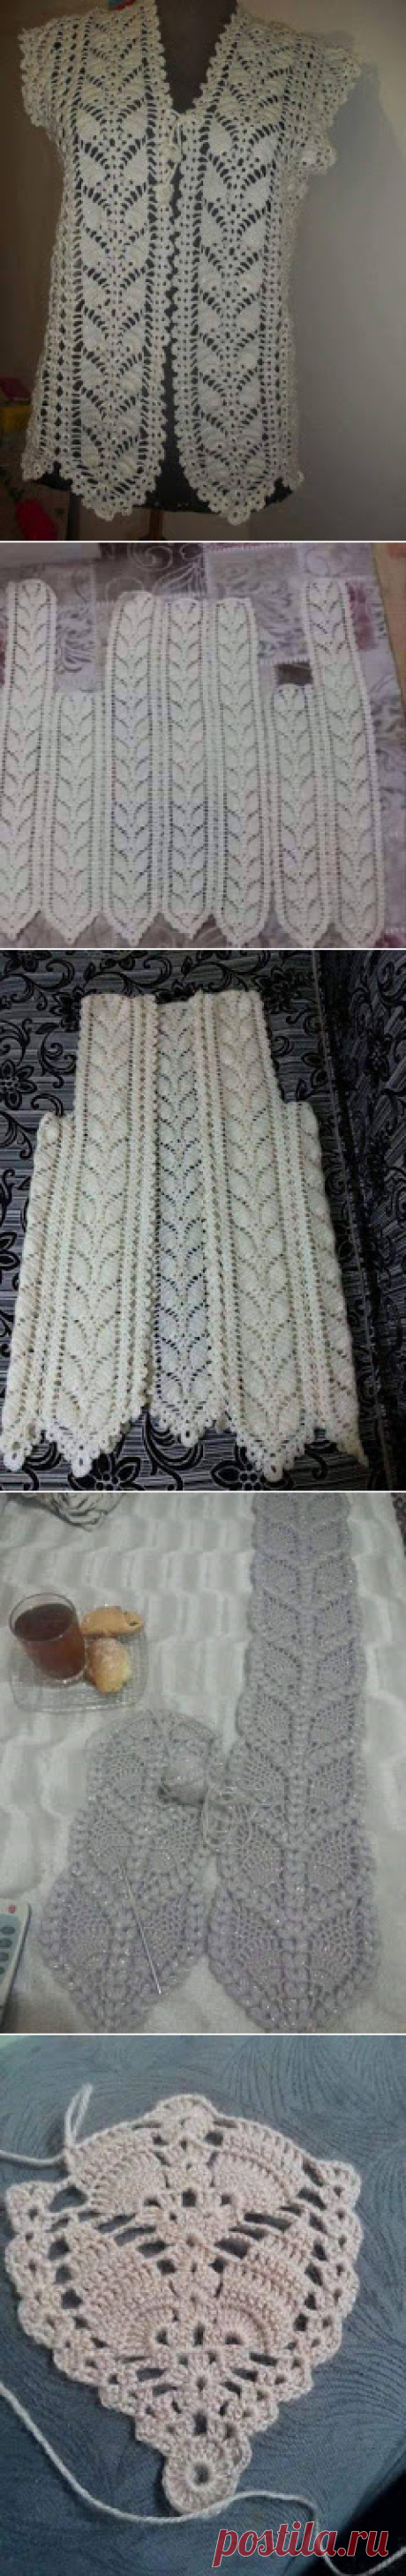 Tina's handicraft : crochet bolero pineapple stitch